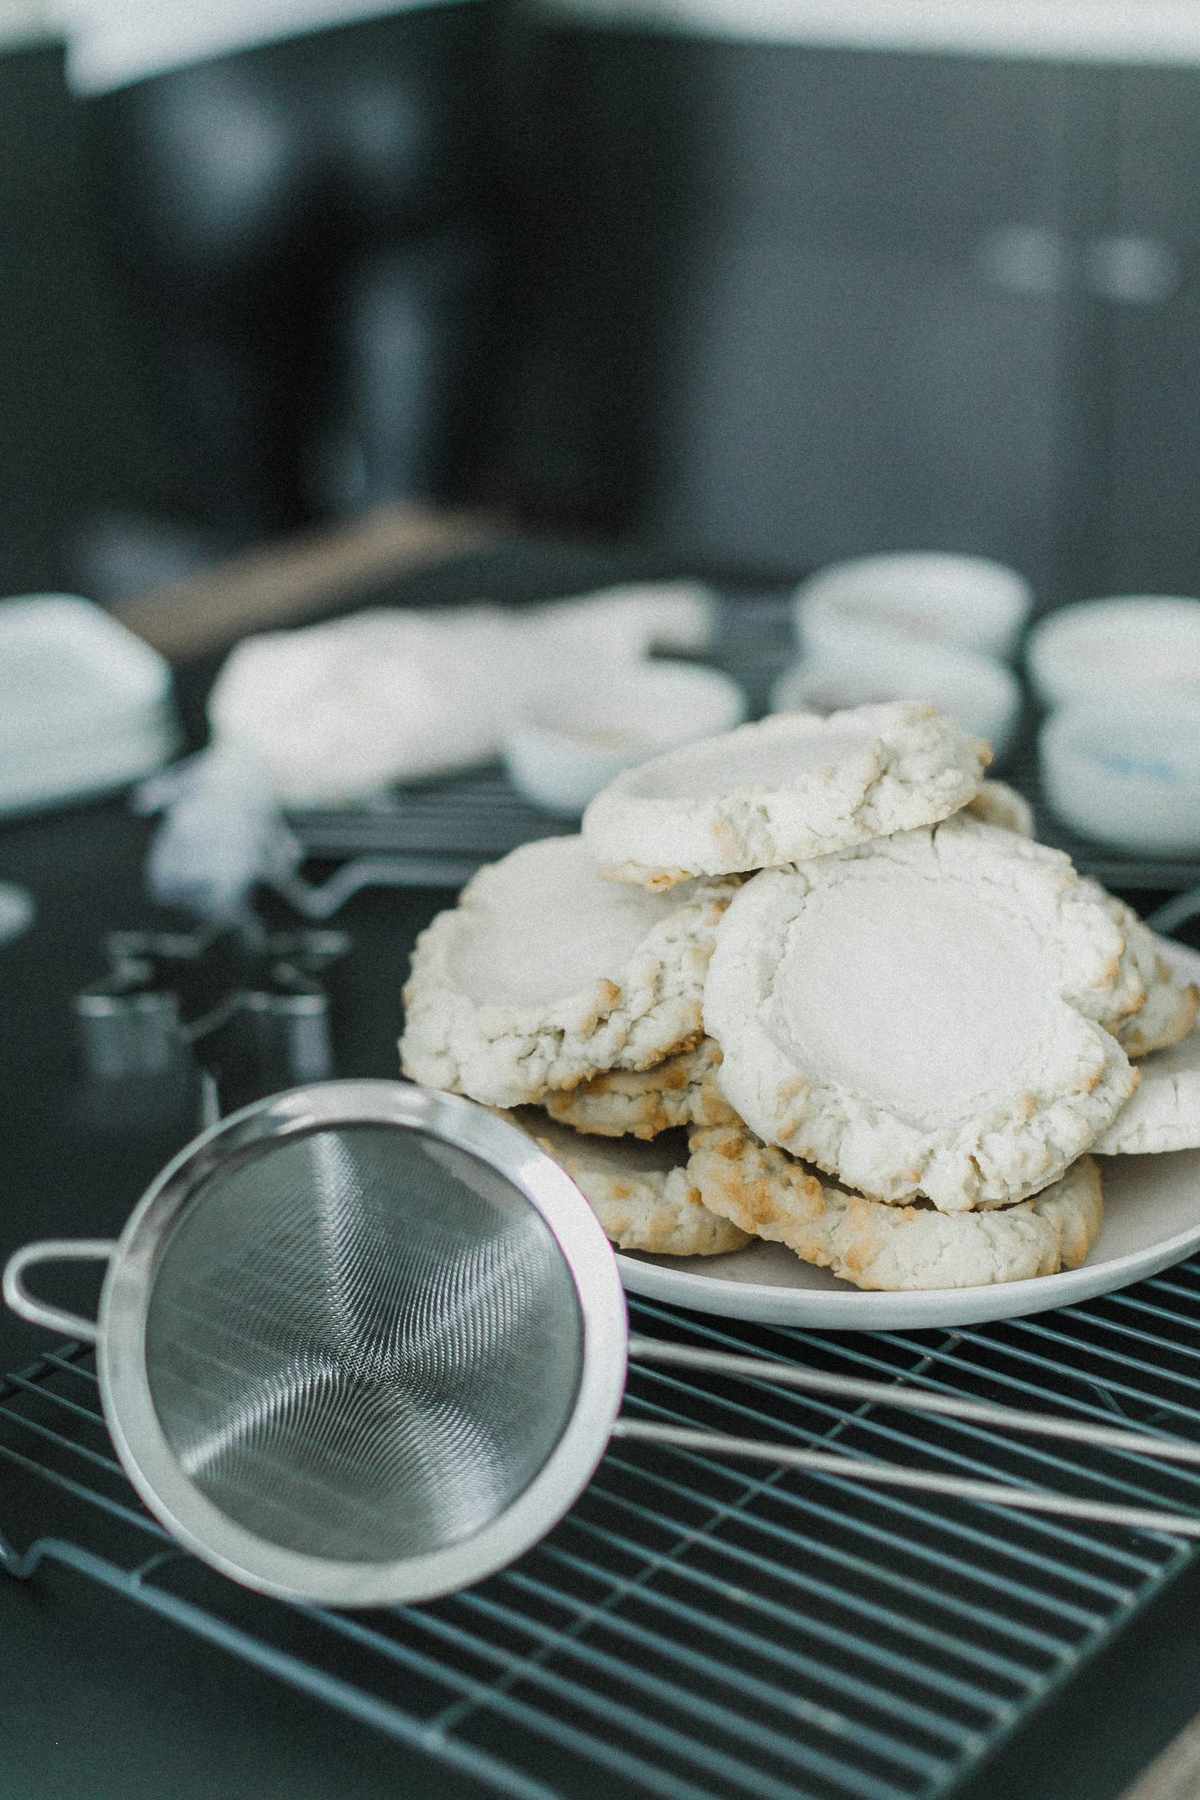 Cara's Sugar “Cloud” Cookies